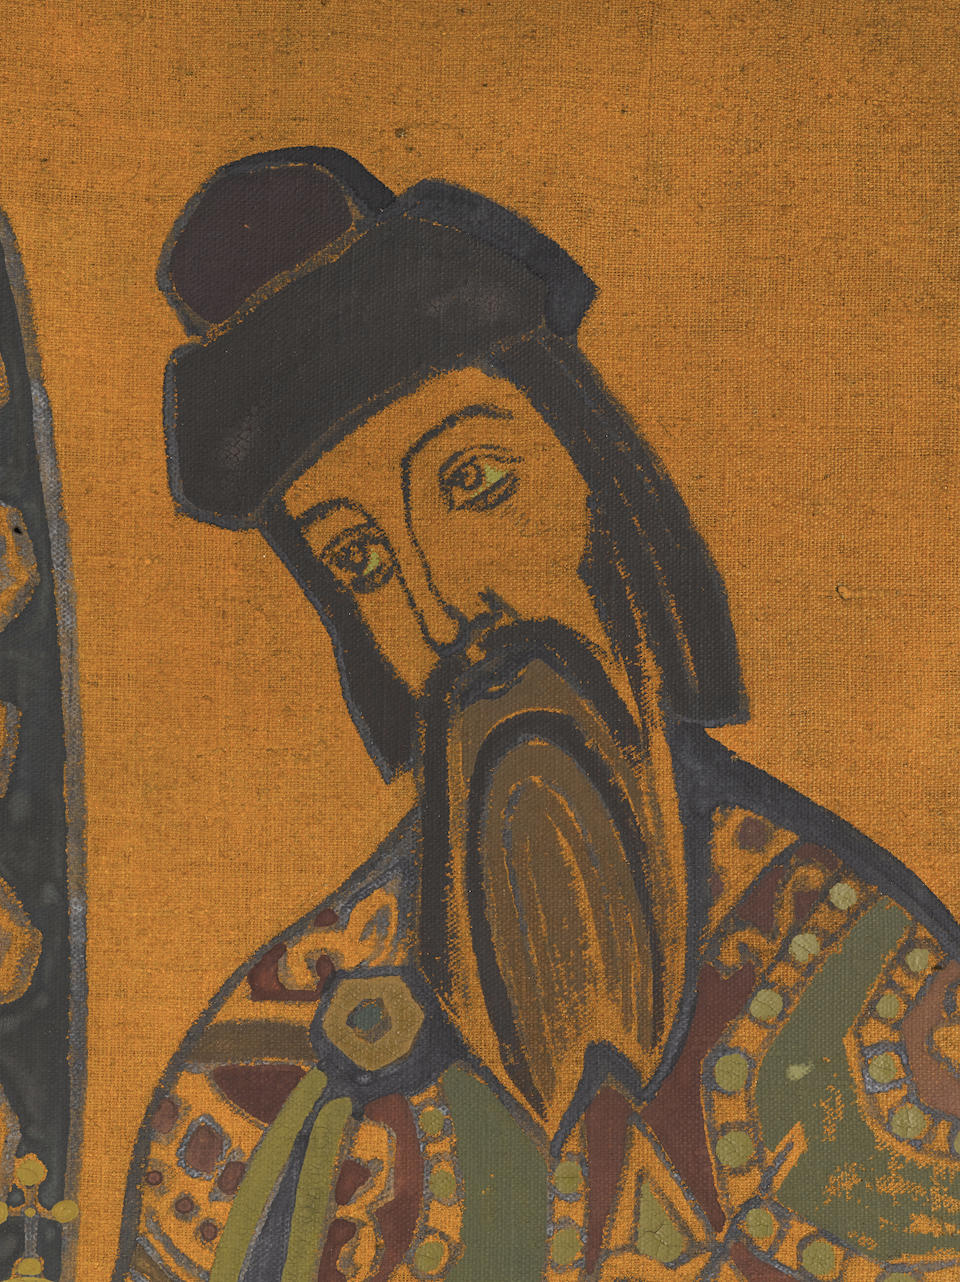 Nikolai Konstantinovich Roerich (Russian, 1874-1947) 'Corona Mundi,' 1921